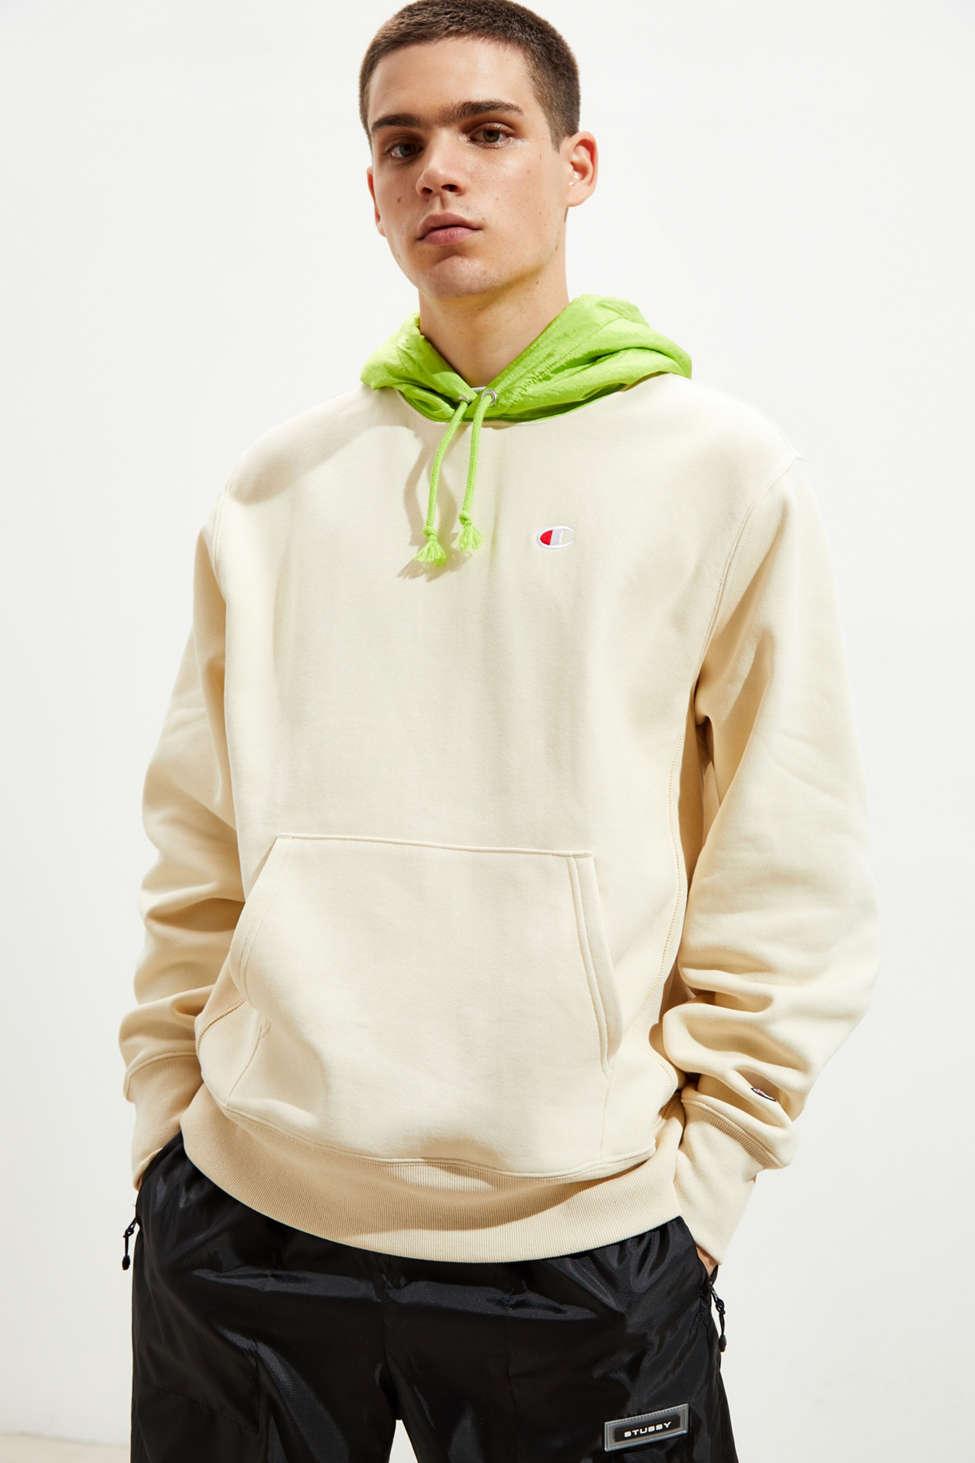 tommy hilfiger uo exclusive colorblock hoodie sweatshirt